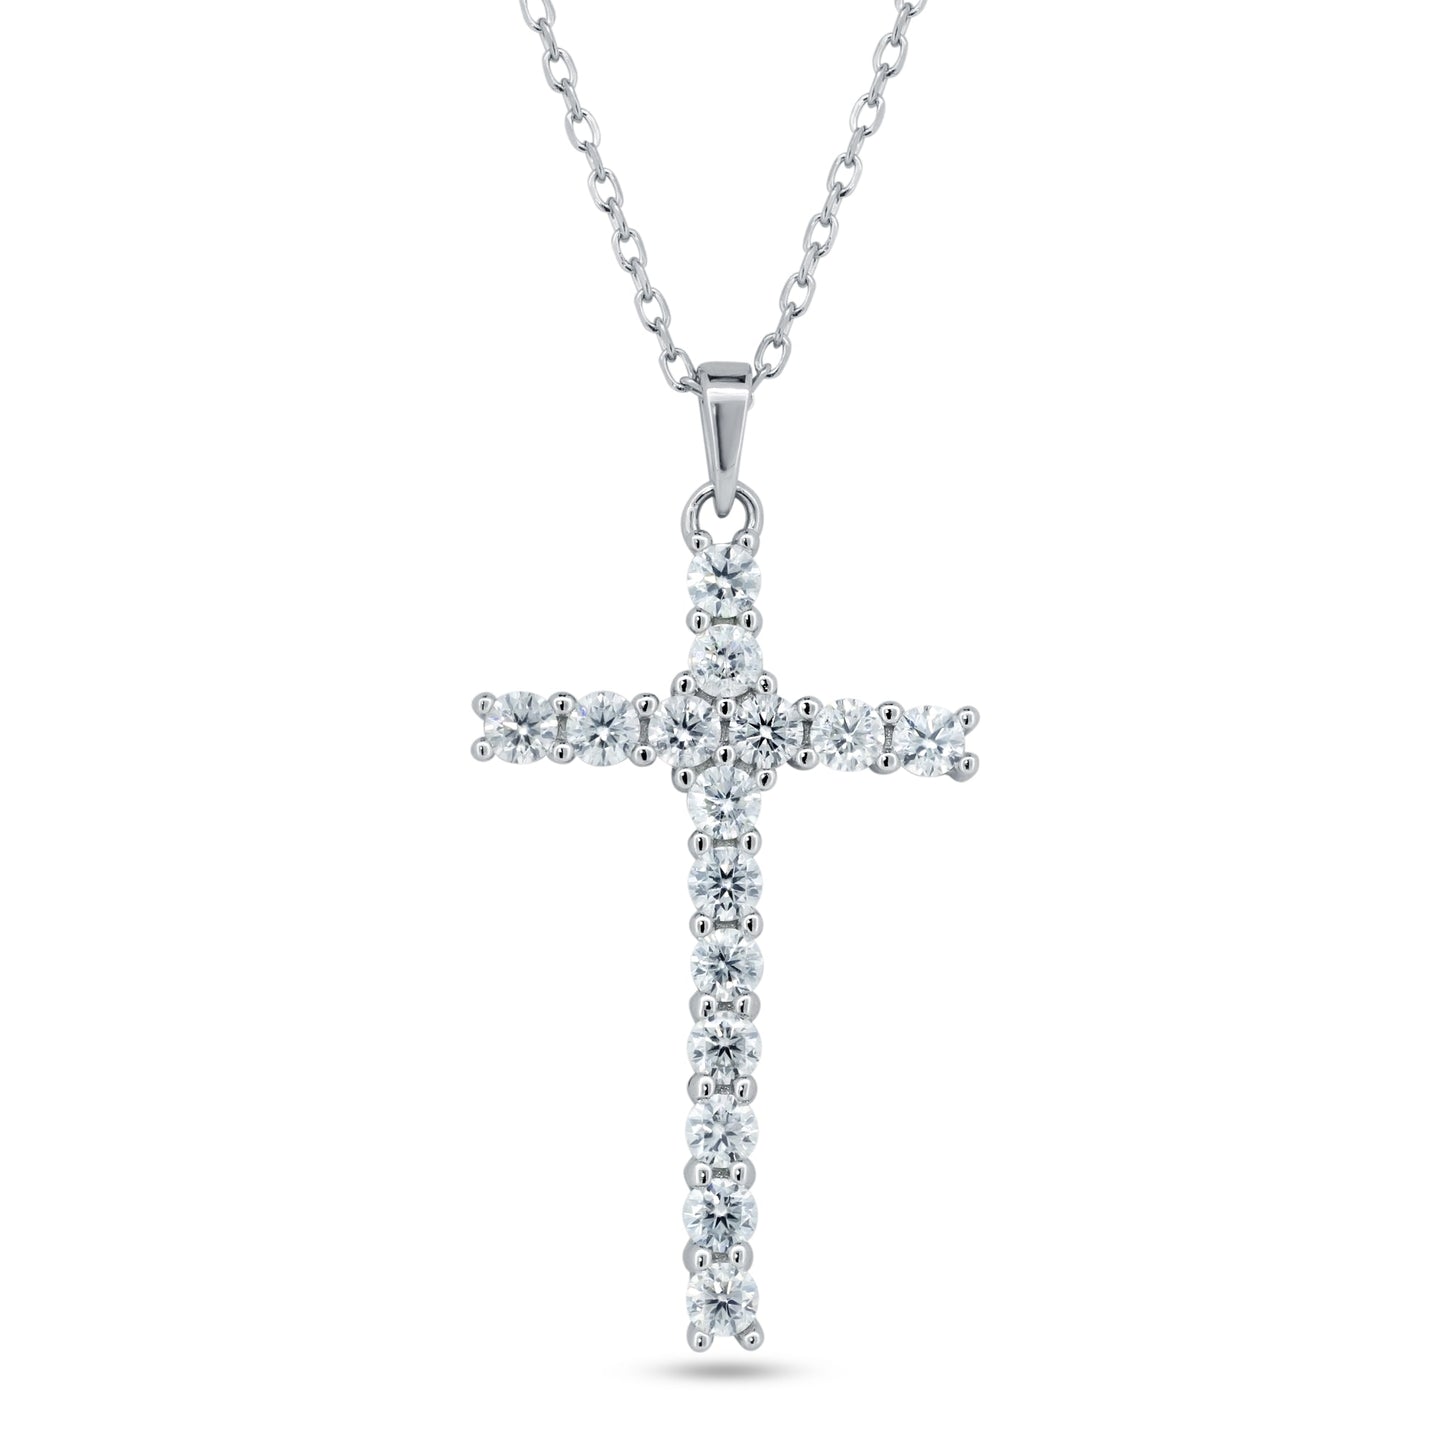 Silver Rhodium 925 Cross Moissanite Necklace - MBGP00003